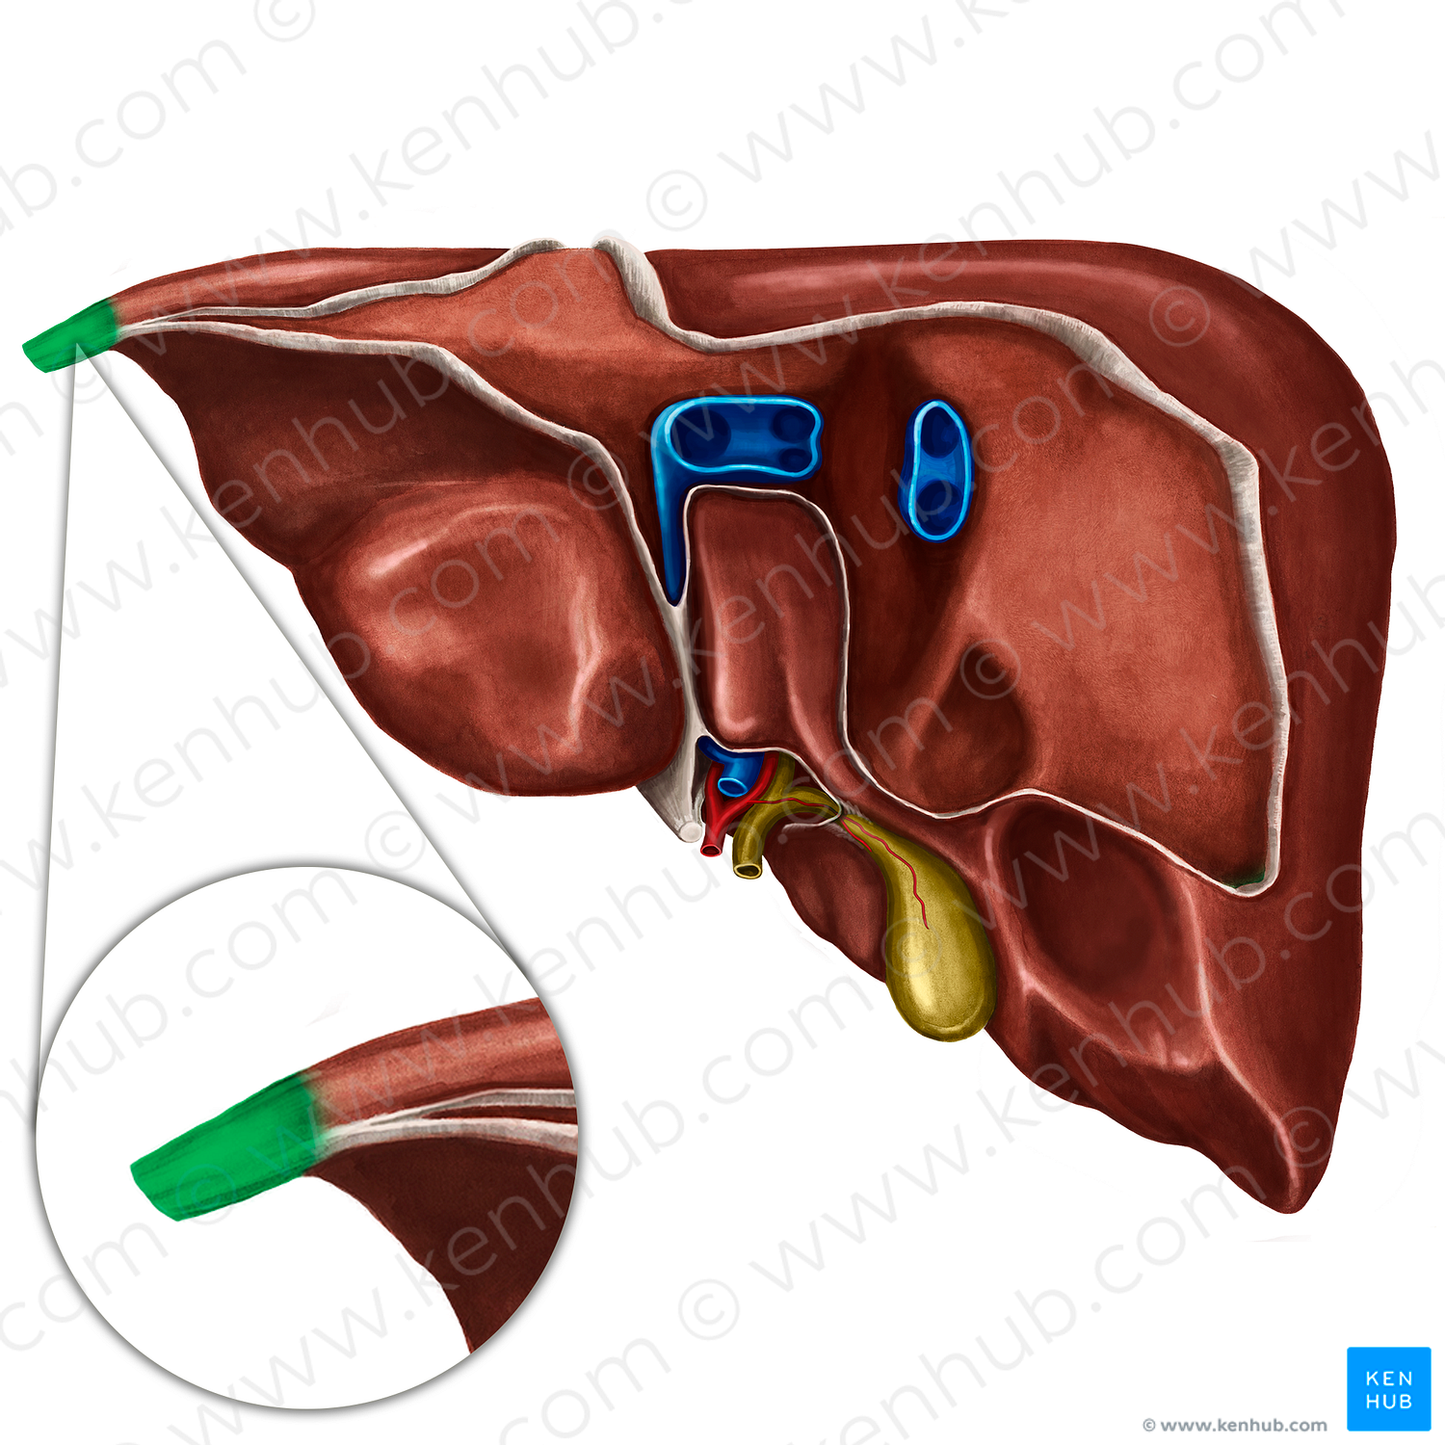 Fibrous appendix of liver (#790)